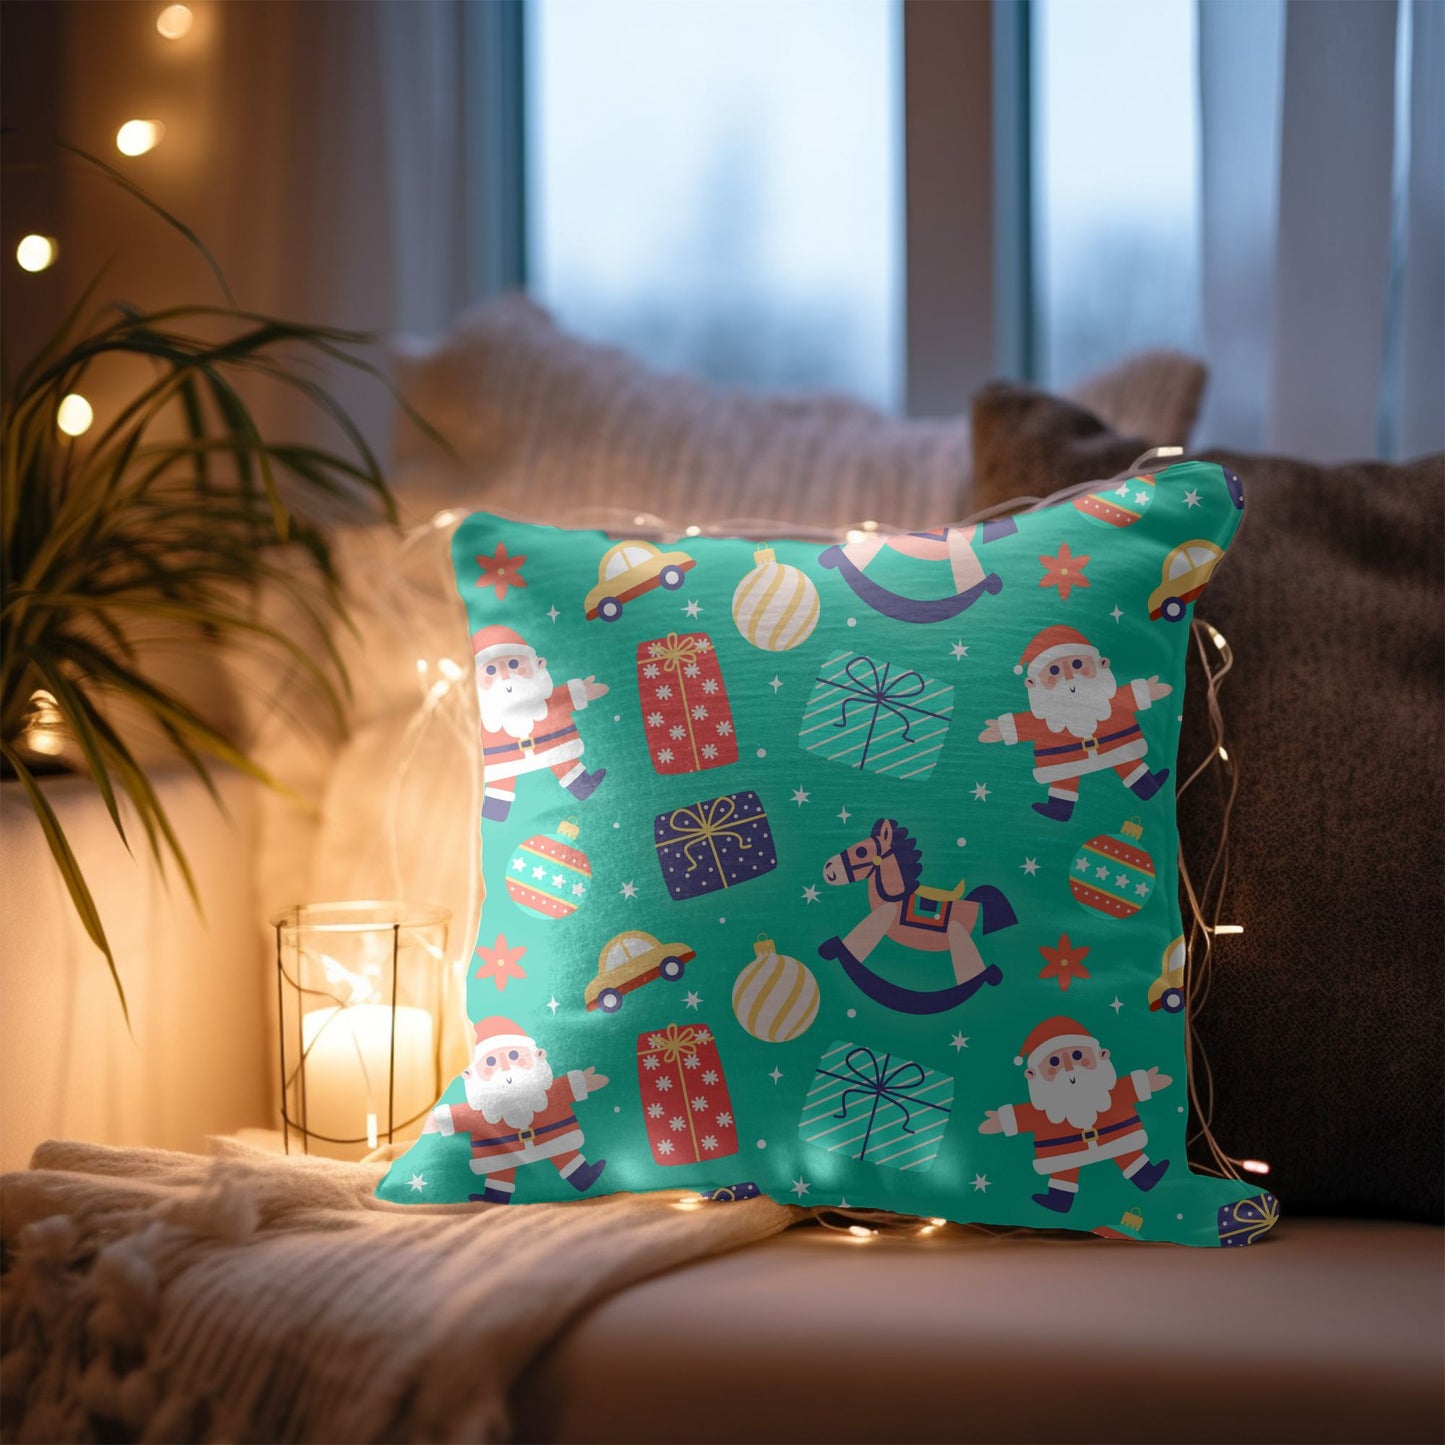 High-Quality Green Throw Pillow for Children's Christmas Decor